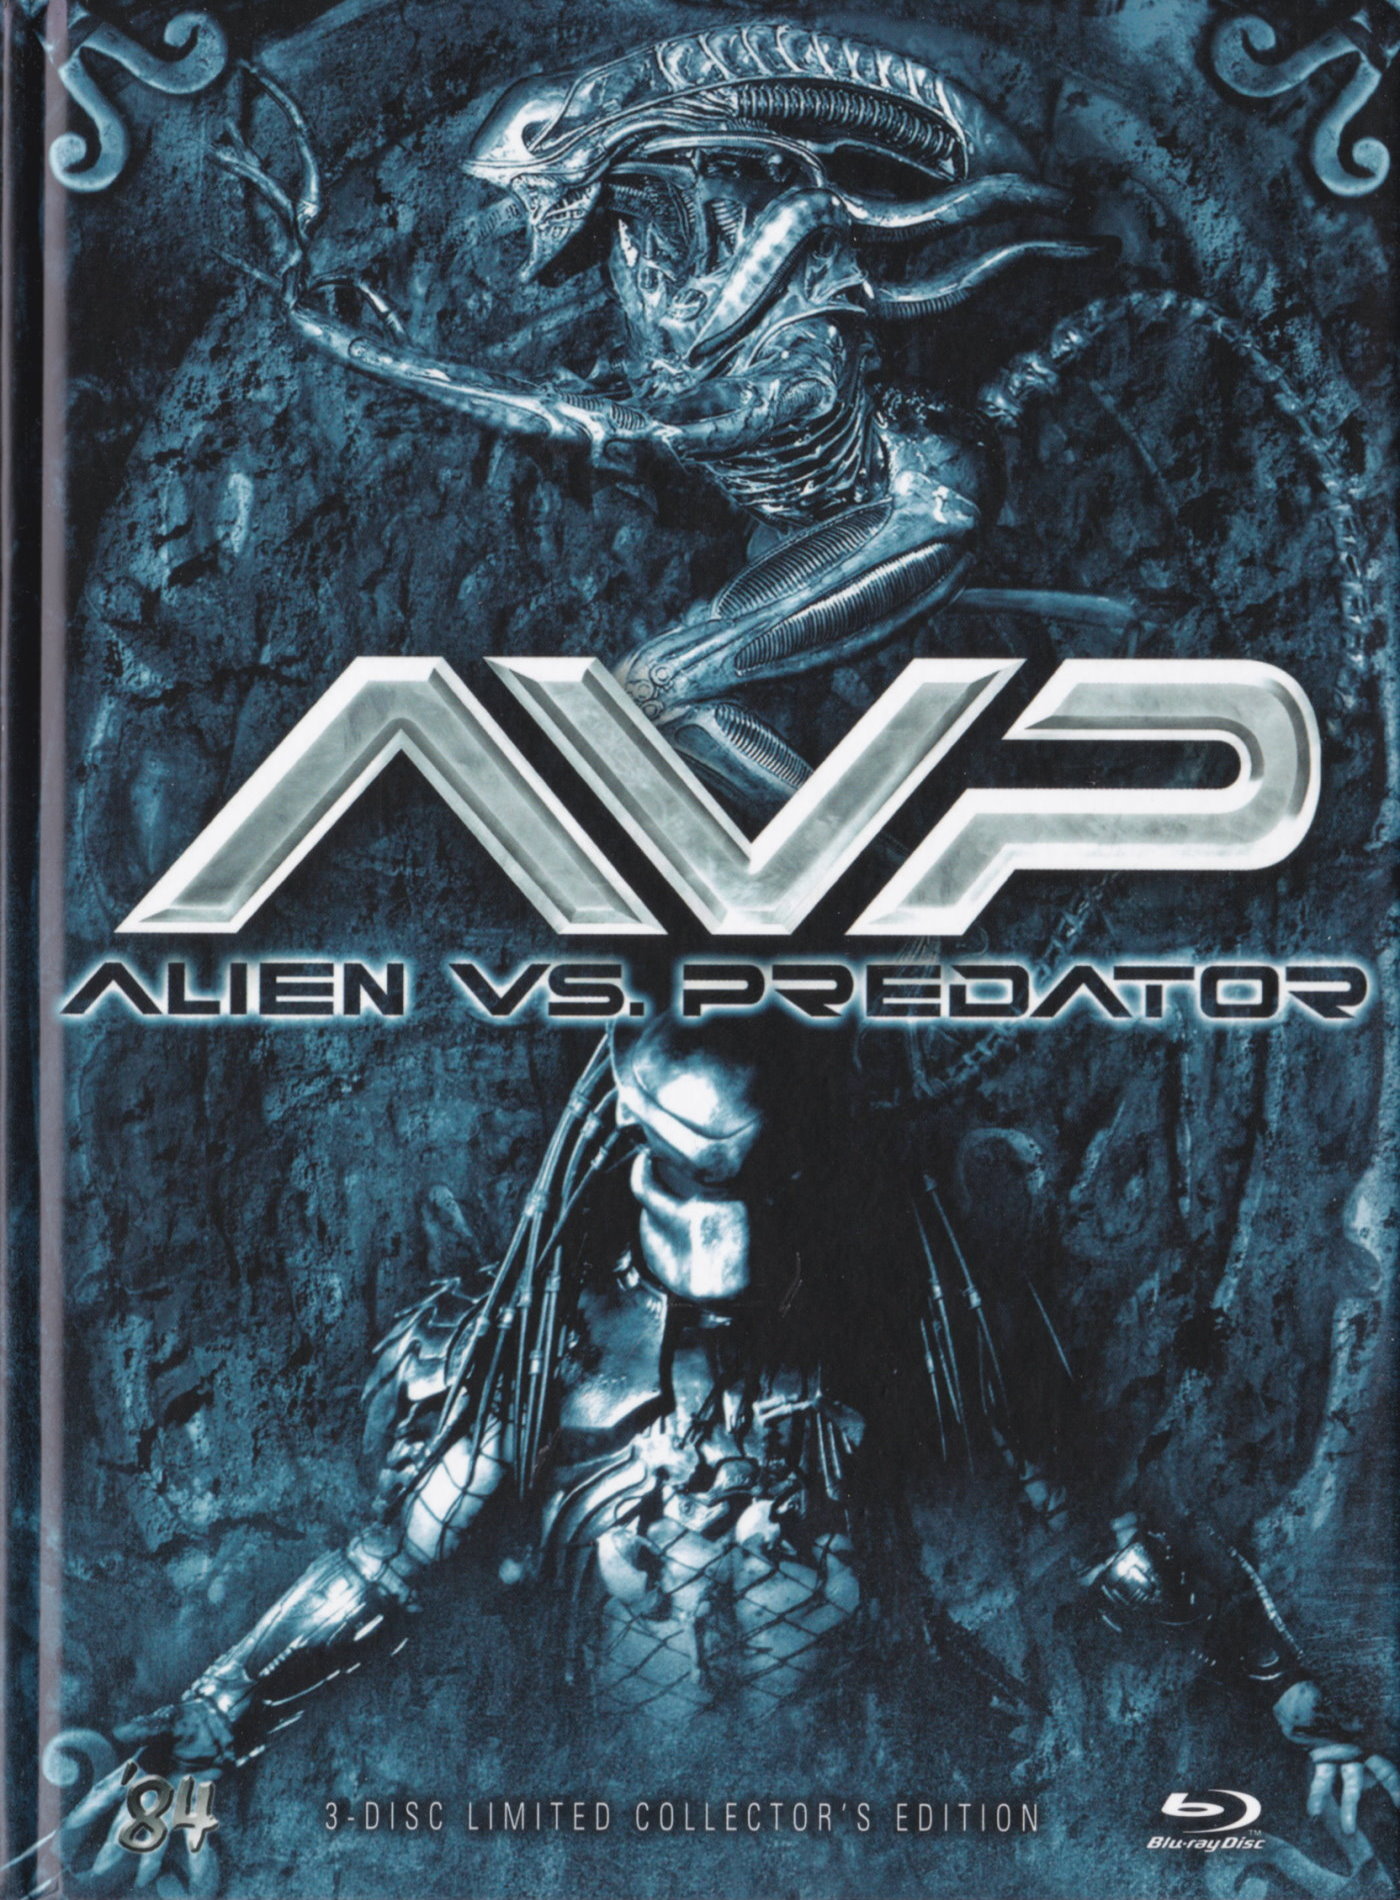 Cover - Alien vs. Predator.jpg